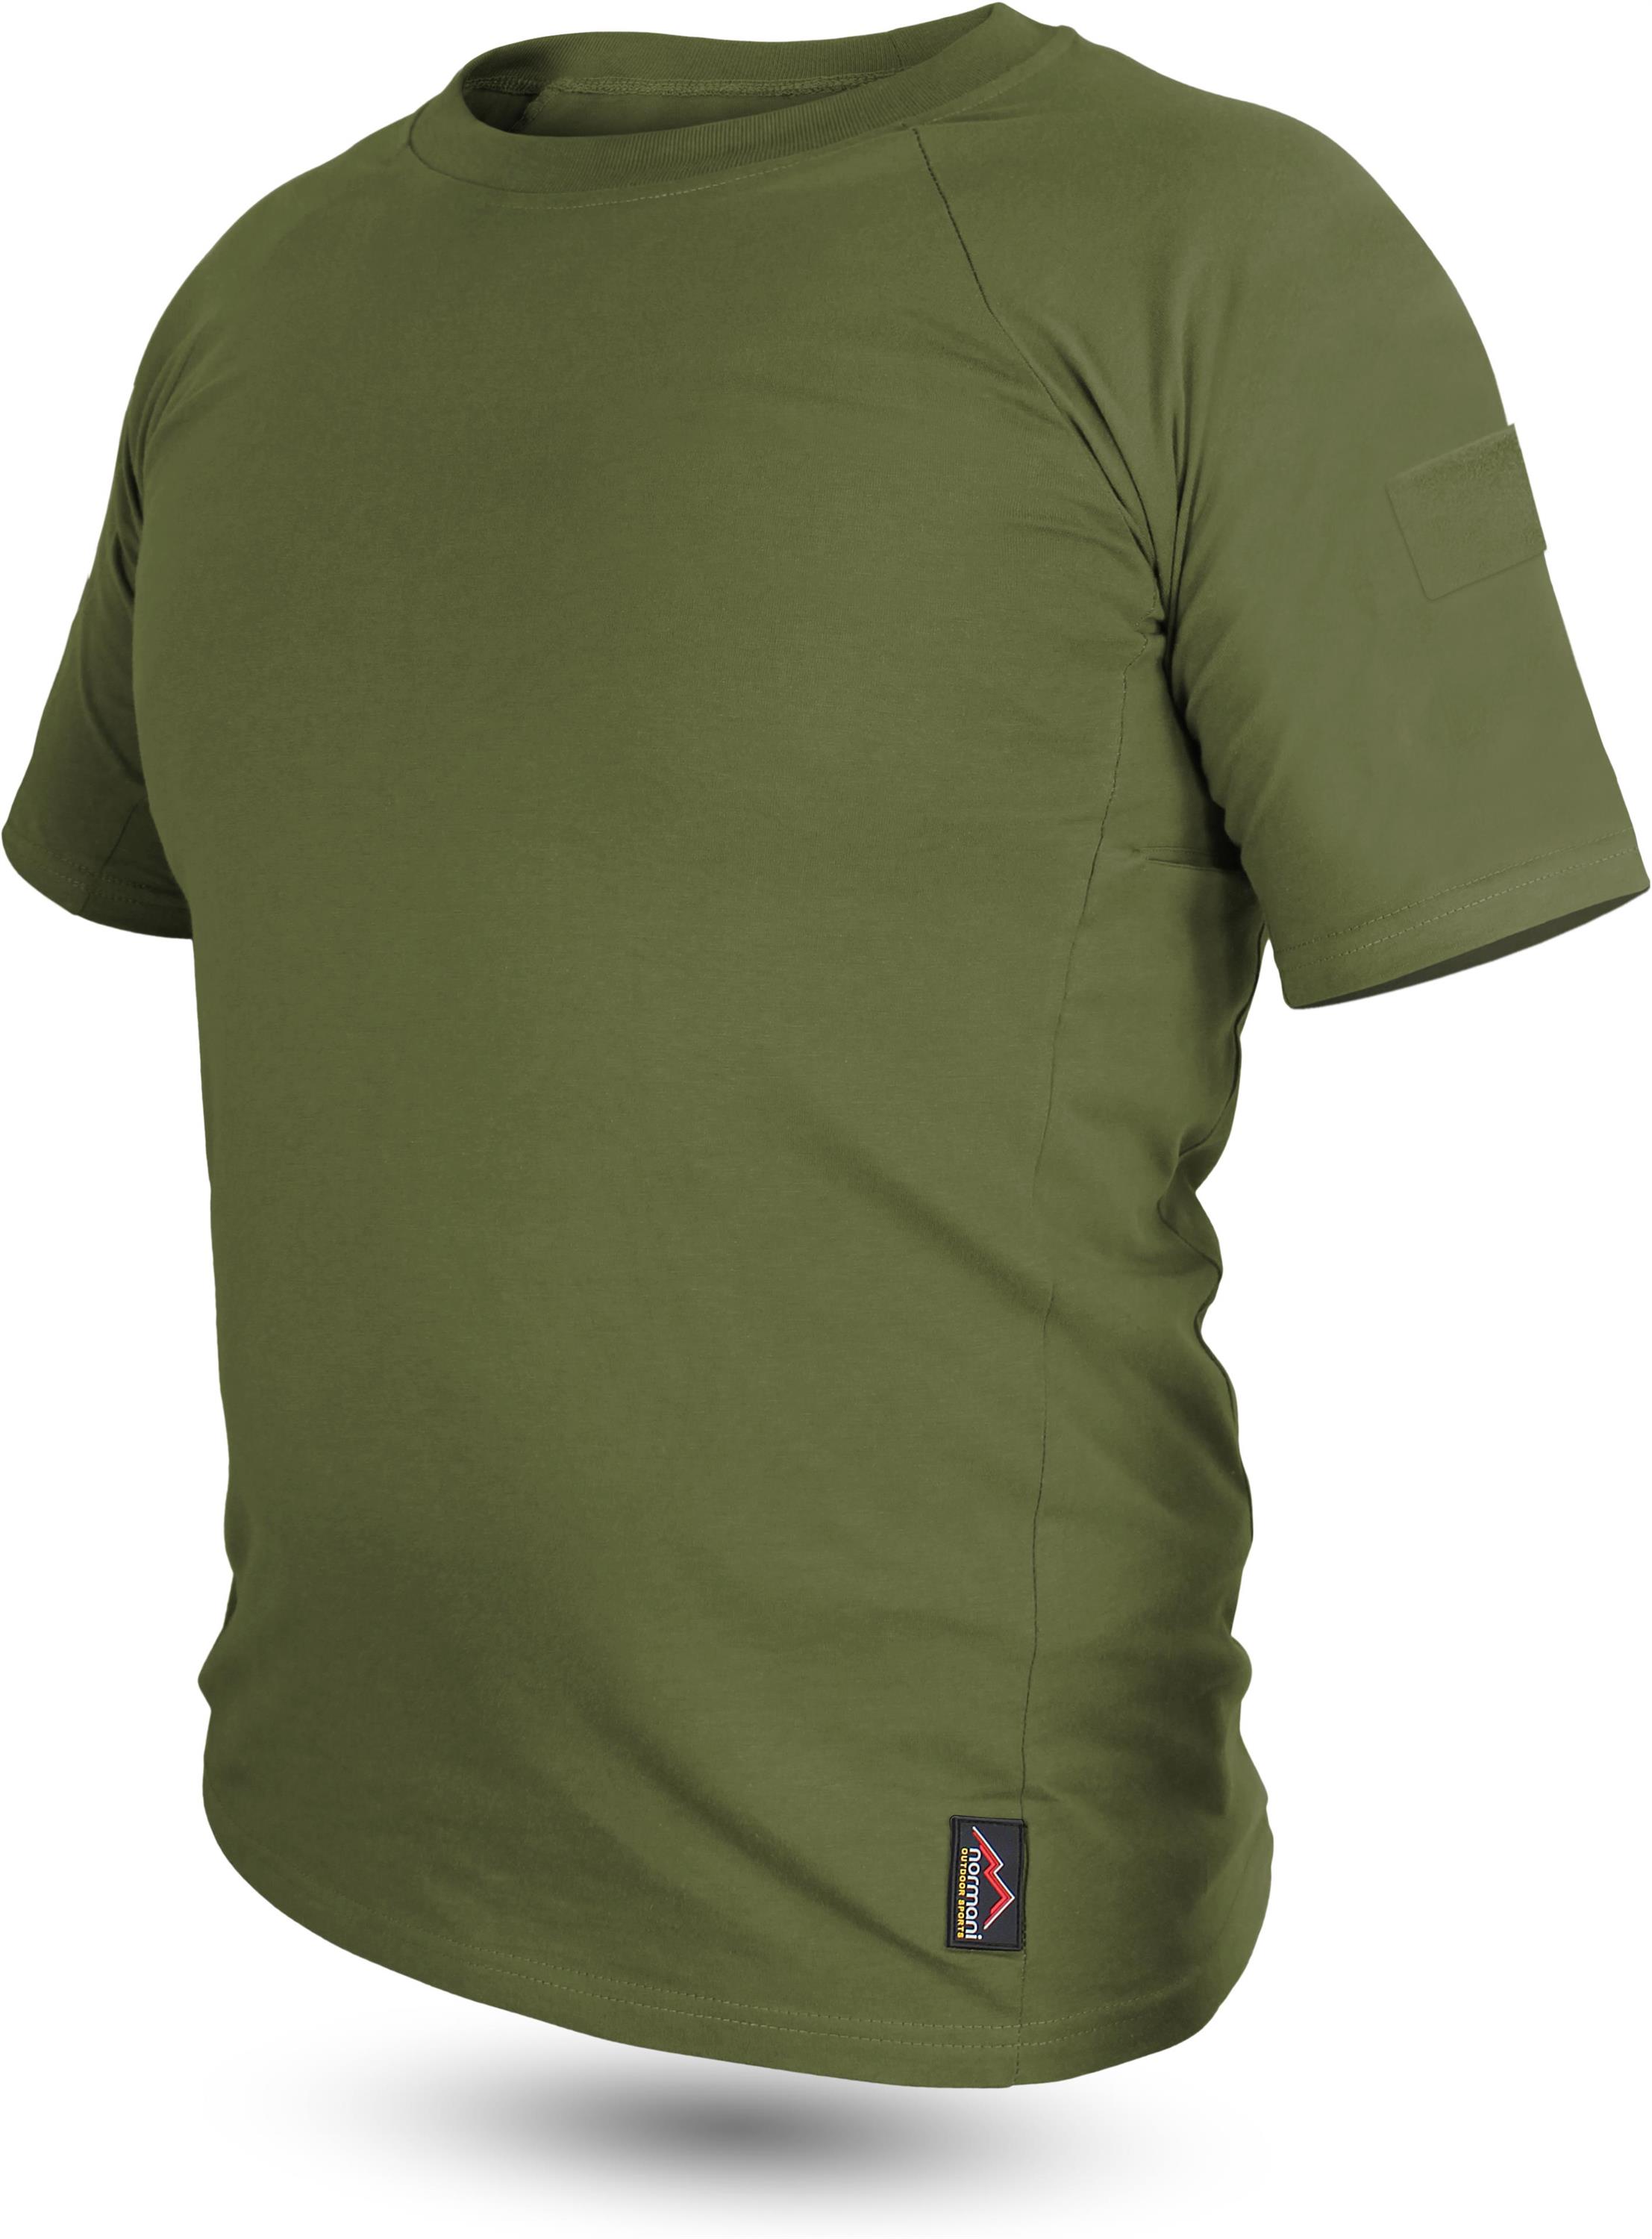 Рубашка Normani Outdoor Sports Herren Taktisches T Shirt Captain, оливковый